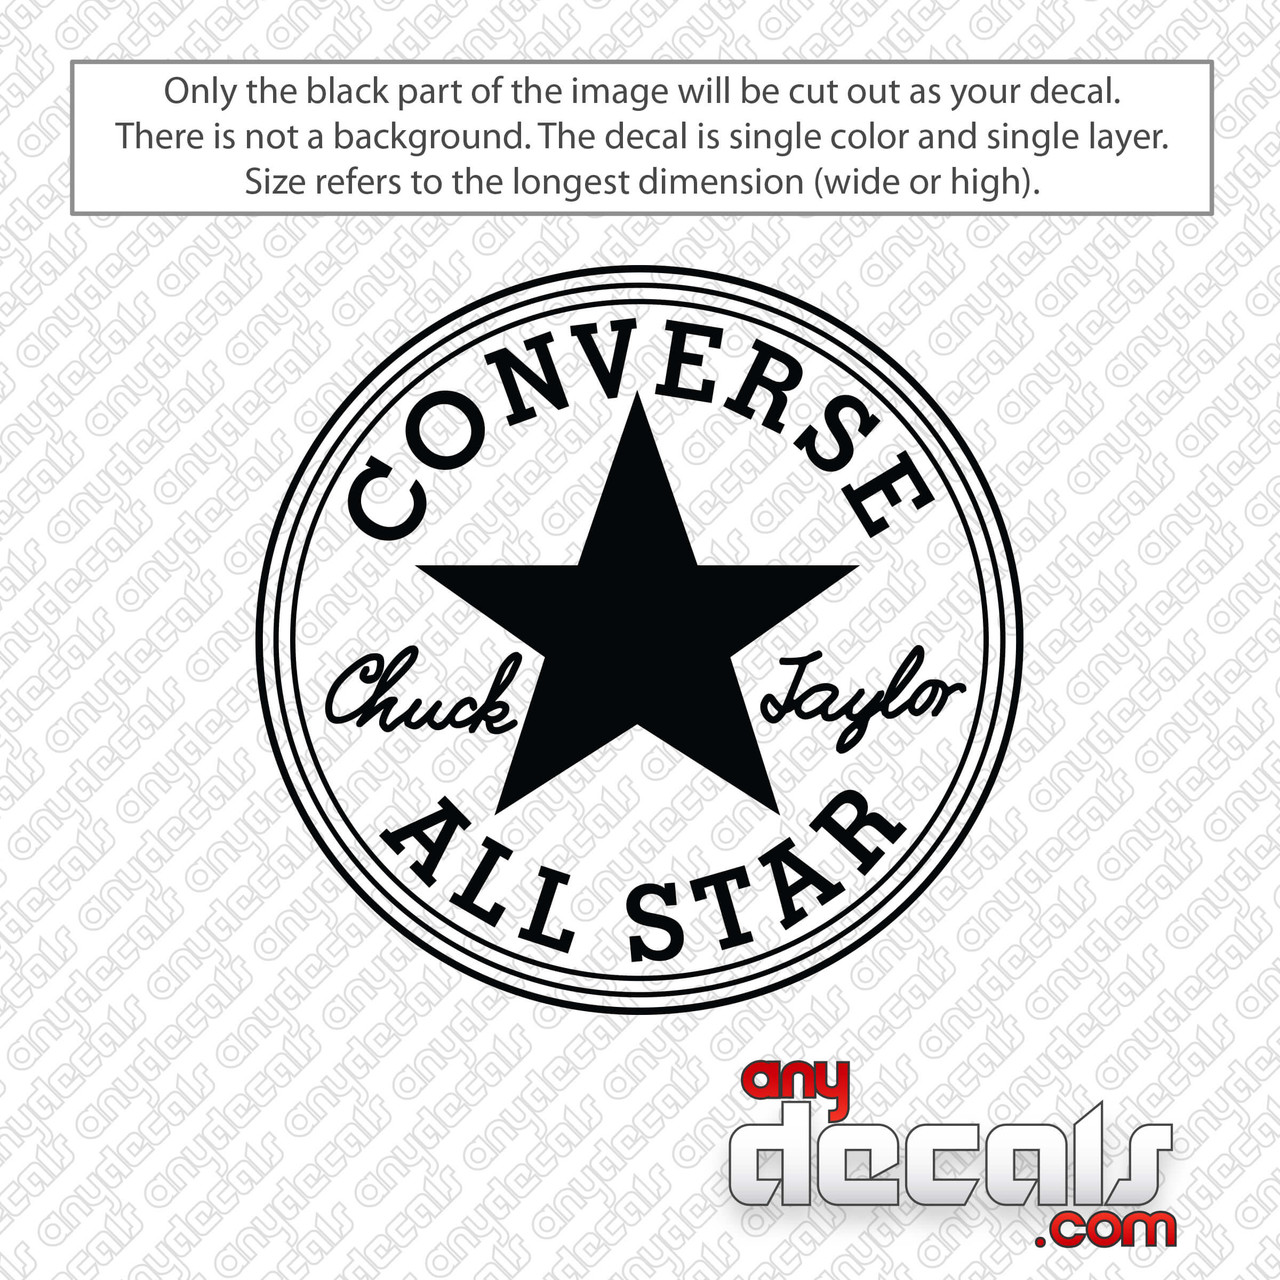 Polvoriento humedad Español Converse All Star Chuck Taylor Logo Decal Sticker - AnyDecals.com